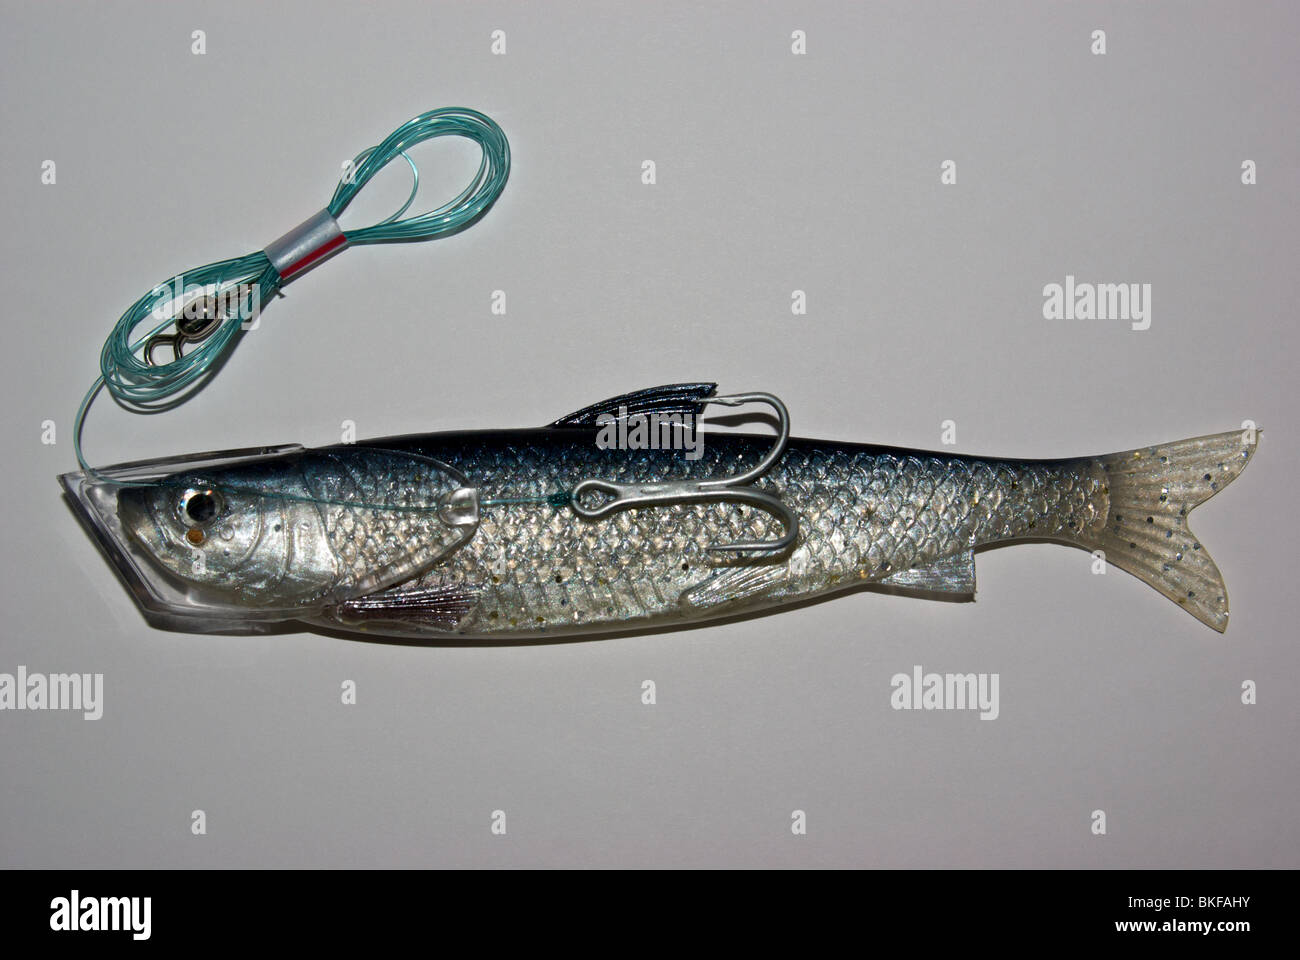 Baitrix full sized soft plastic imitation herring lure in clear